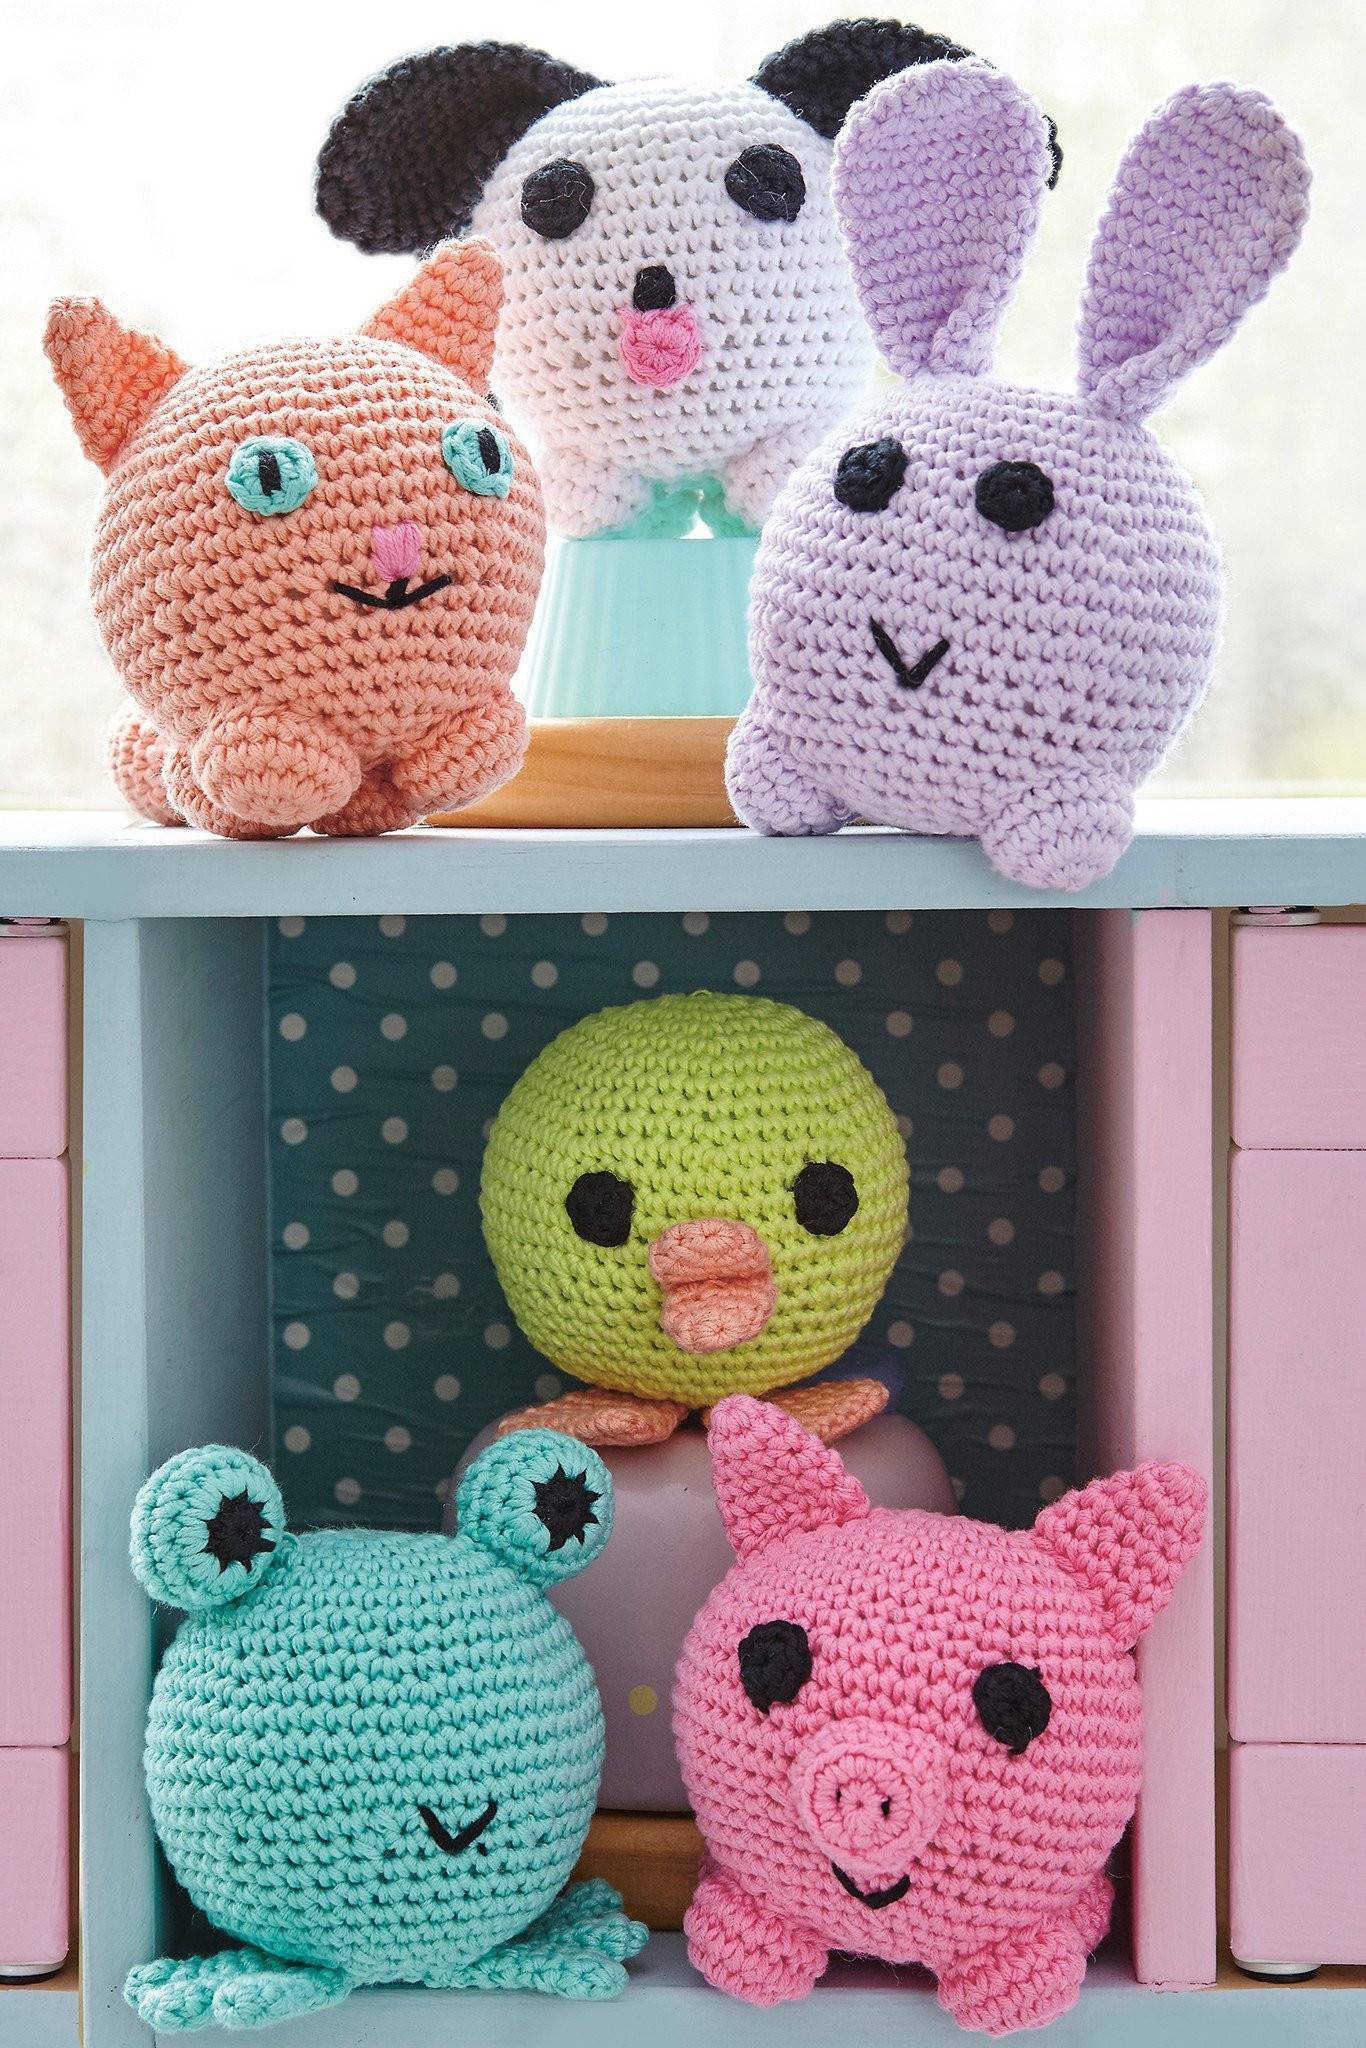 Amigurumi Animal Toy Crochet Pattern | The Knitting Network